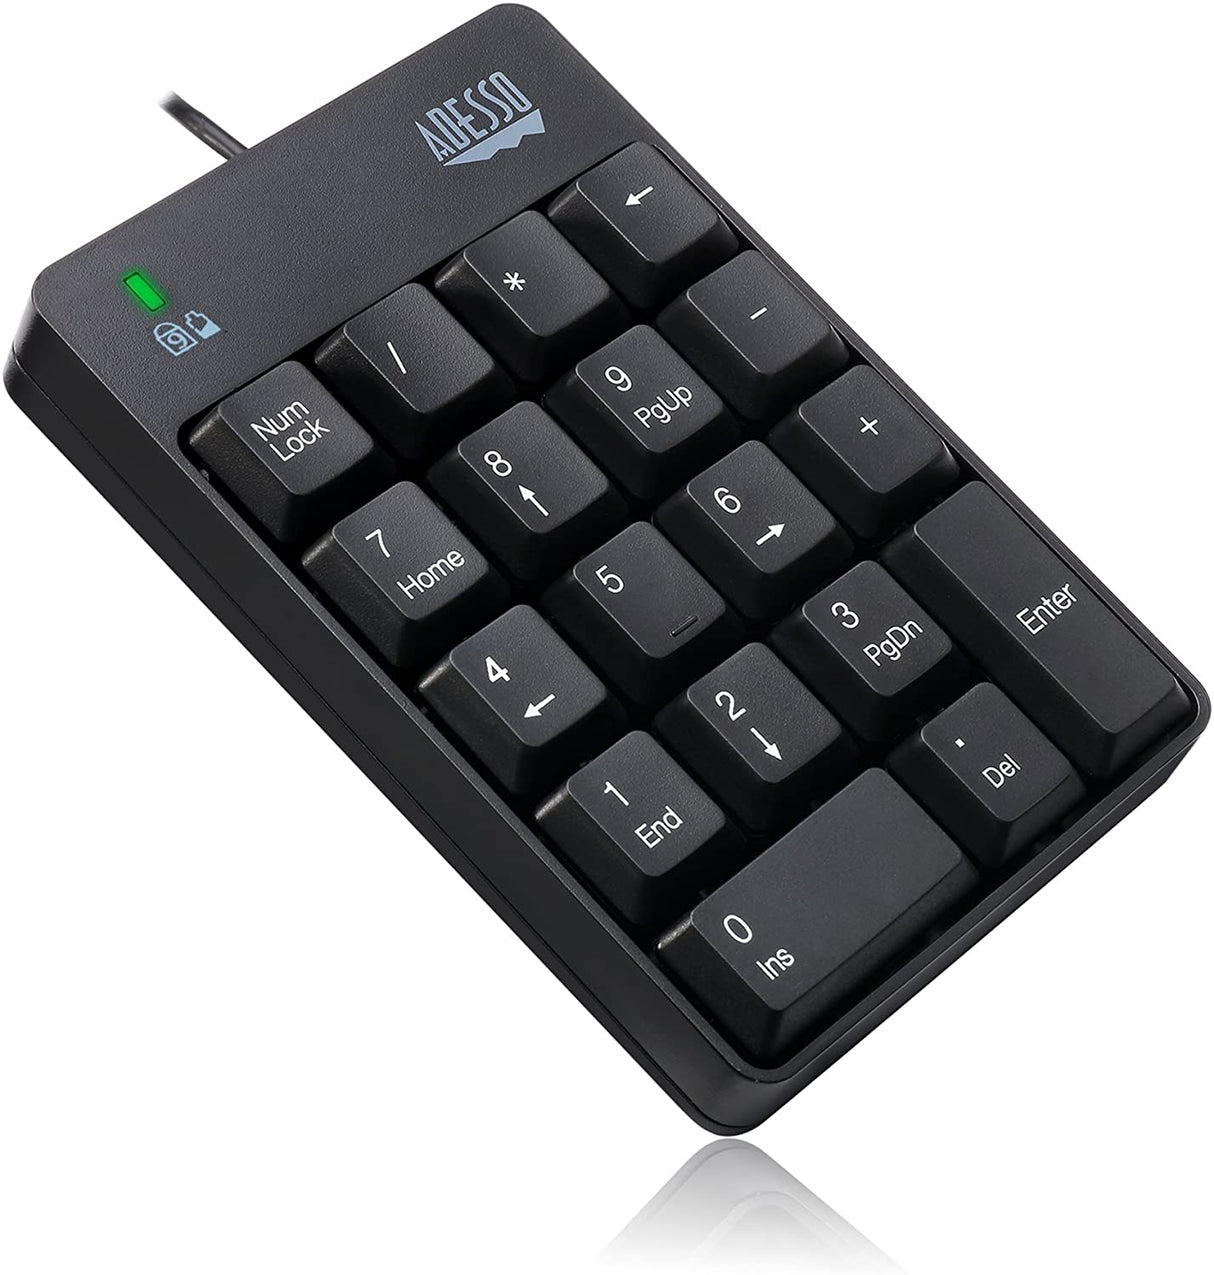 Adesso AKB-601UB USB Spill Resistant 18-Key Numeric Keypad,Black - Dealtargets.com